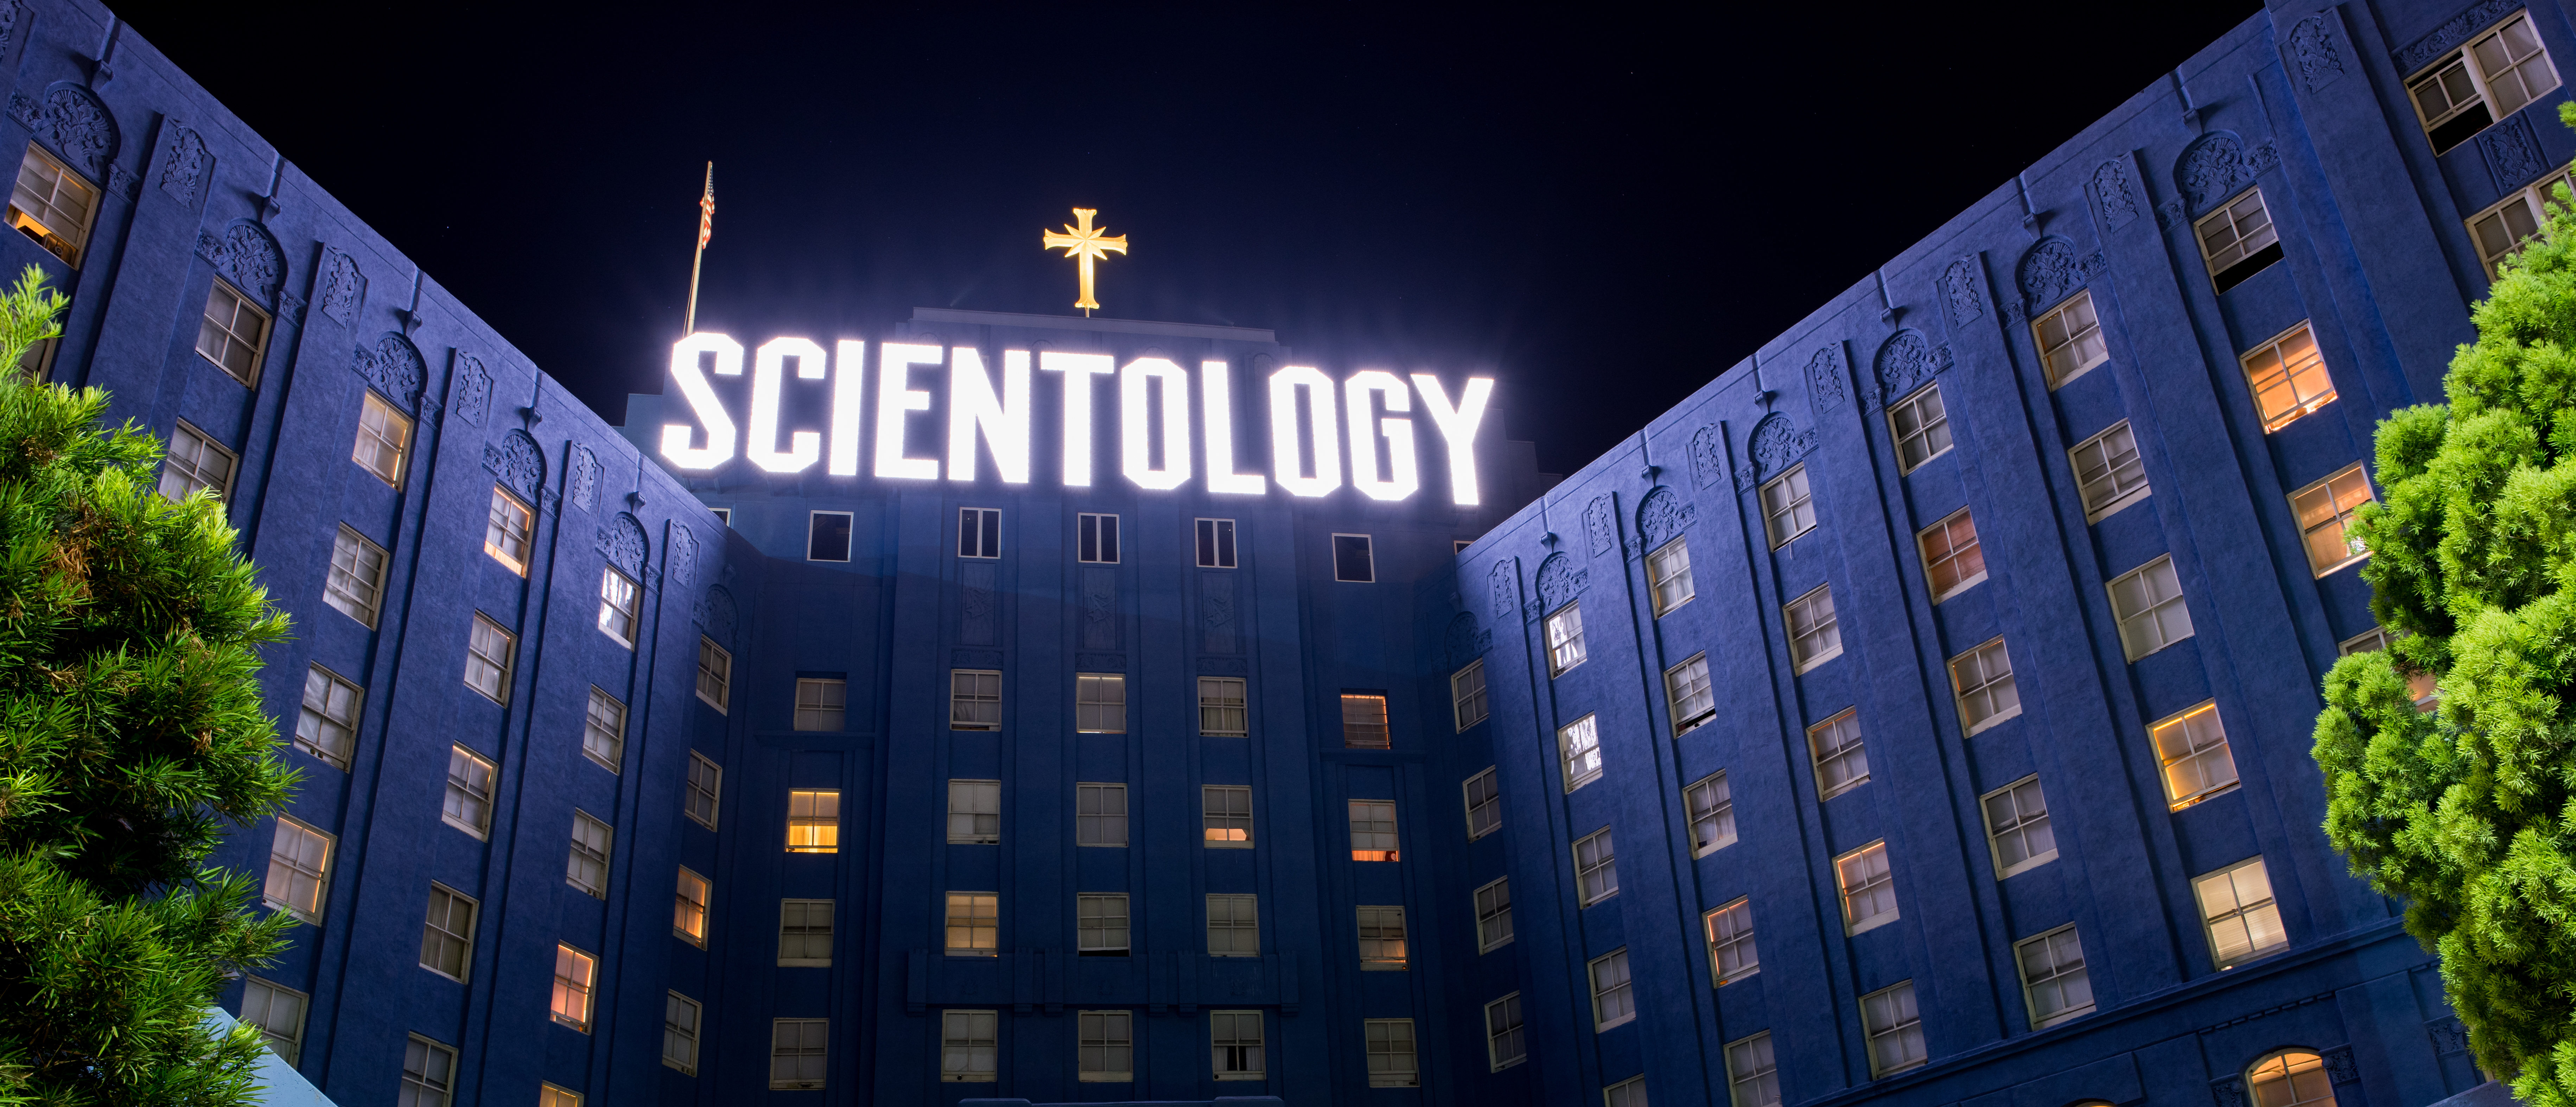 Church of Scientology (Shutterstock/Michael Gordon)